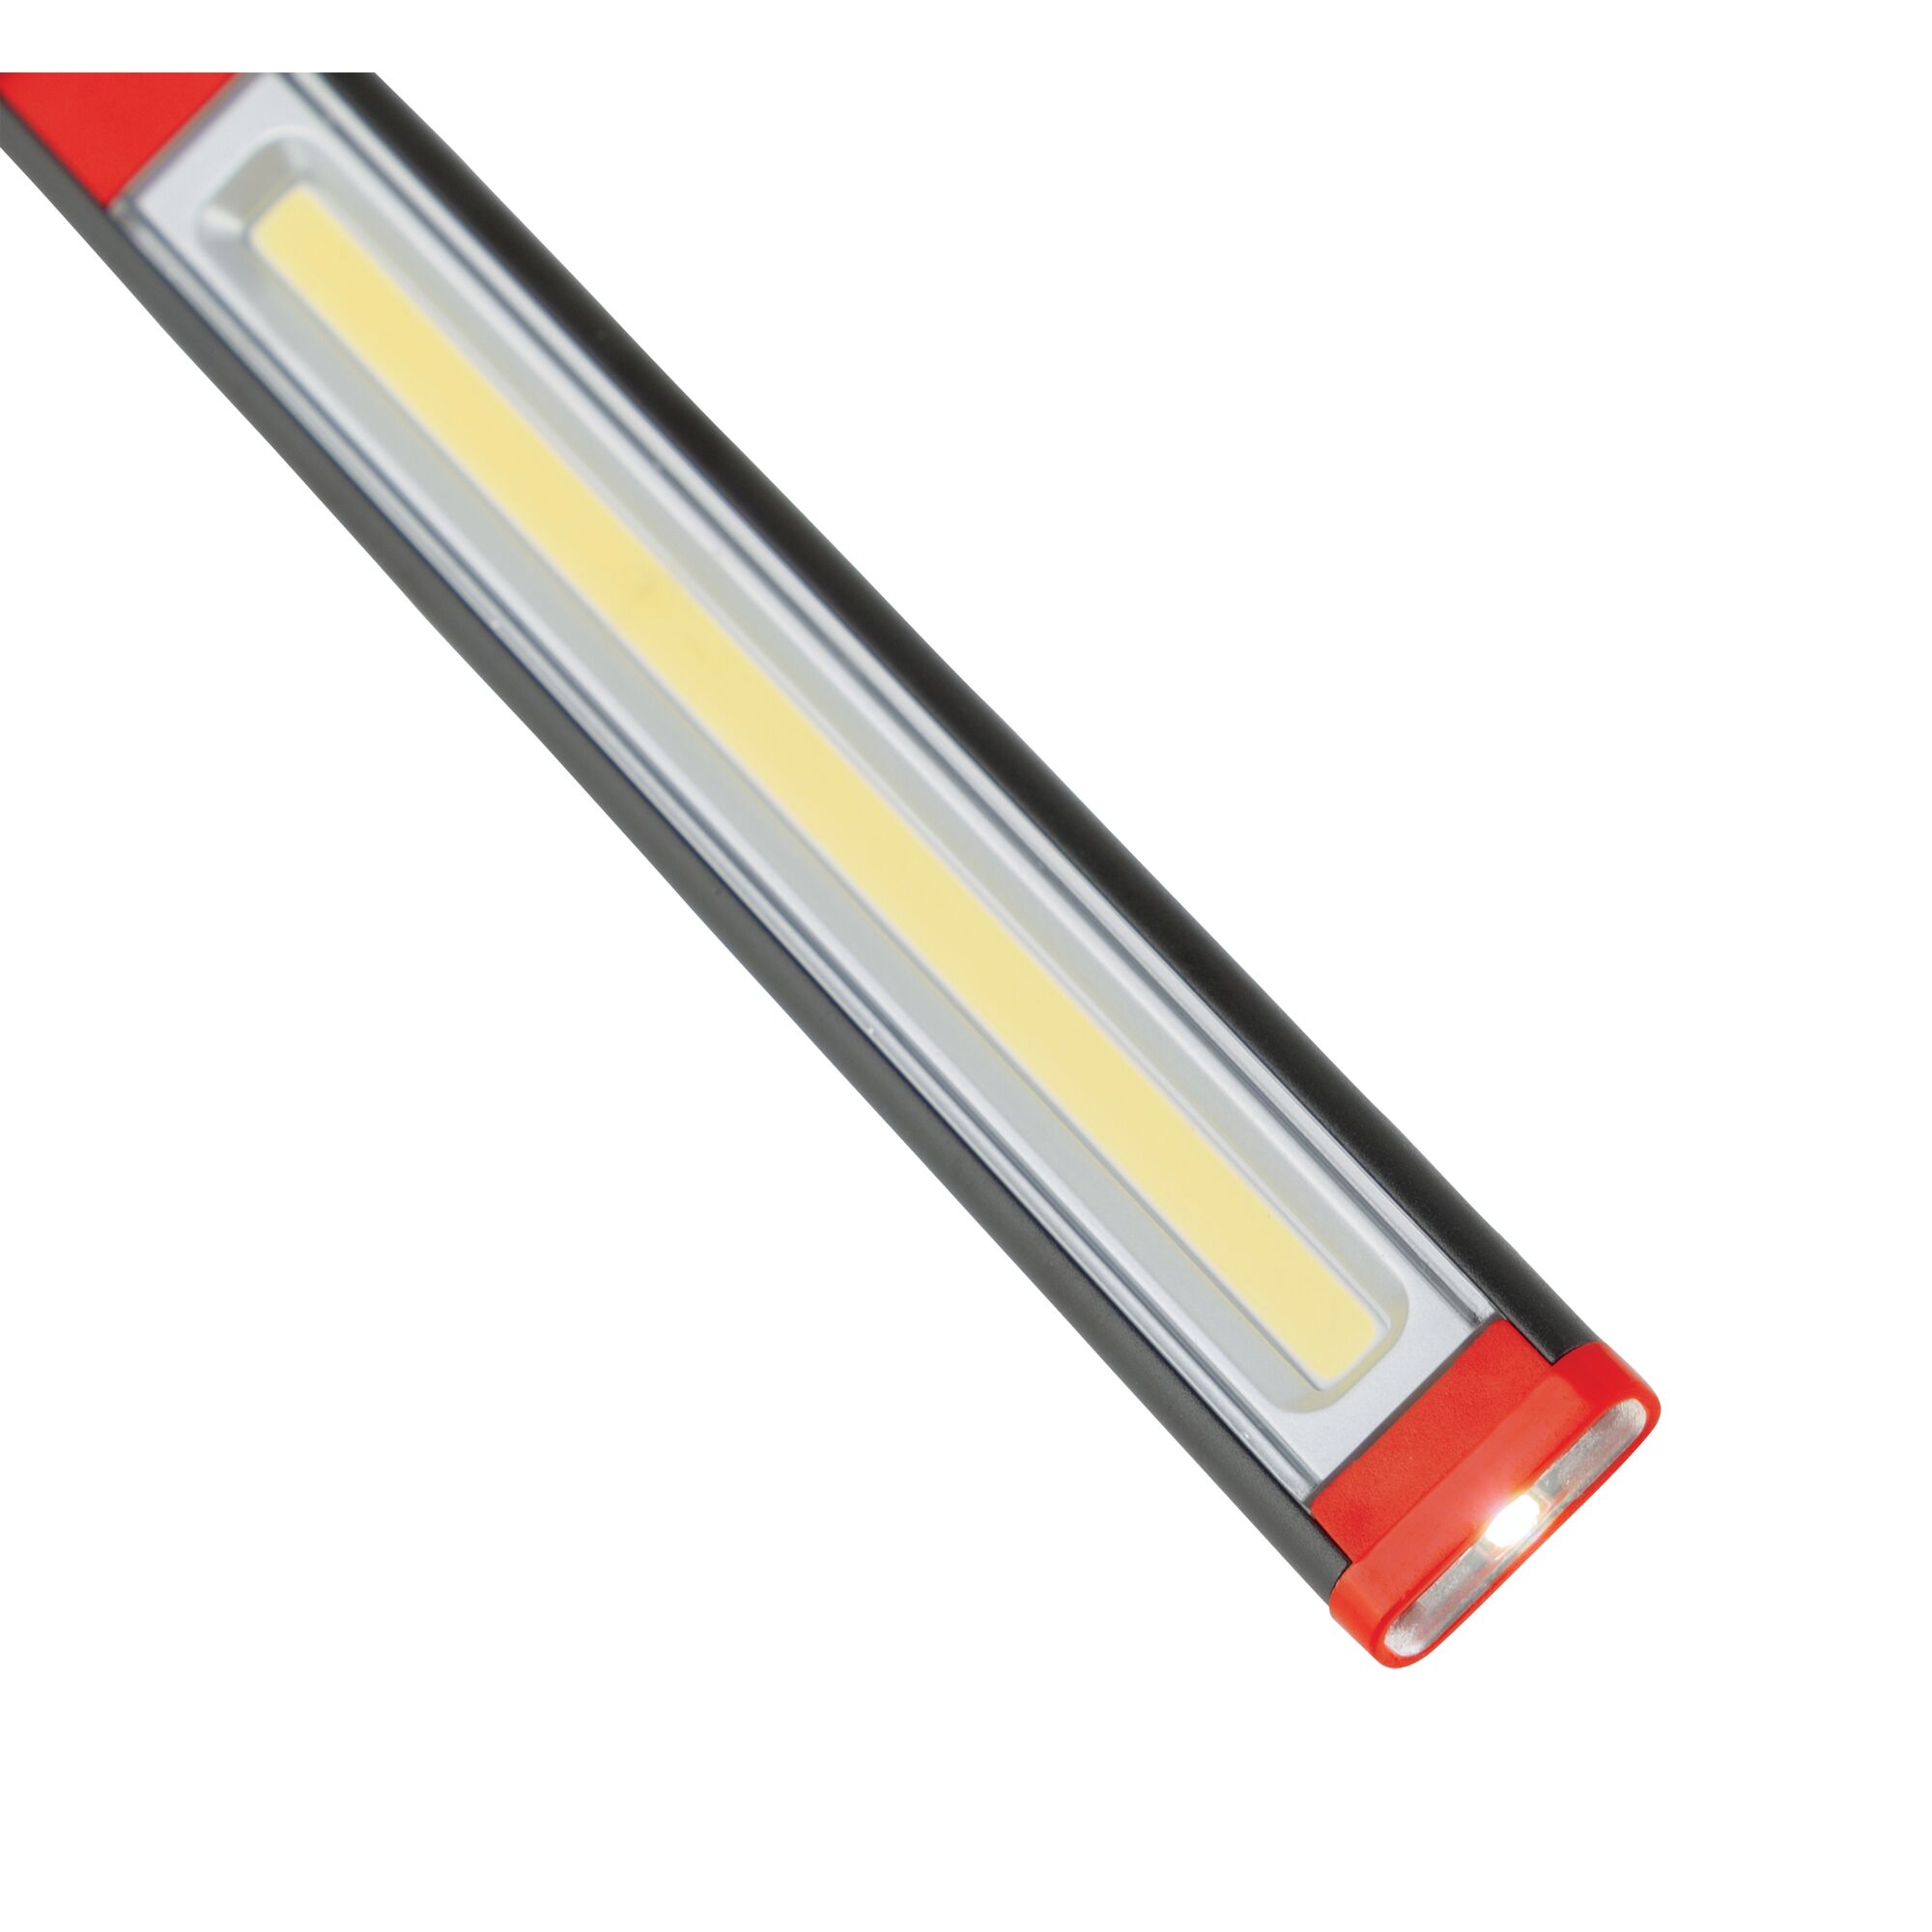 Adjustable light bar angles feature of automotive 280 lumen l e d articulating work light.